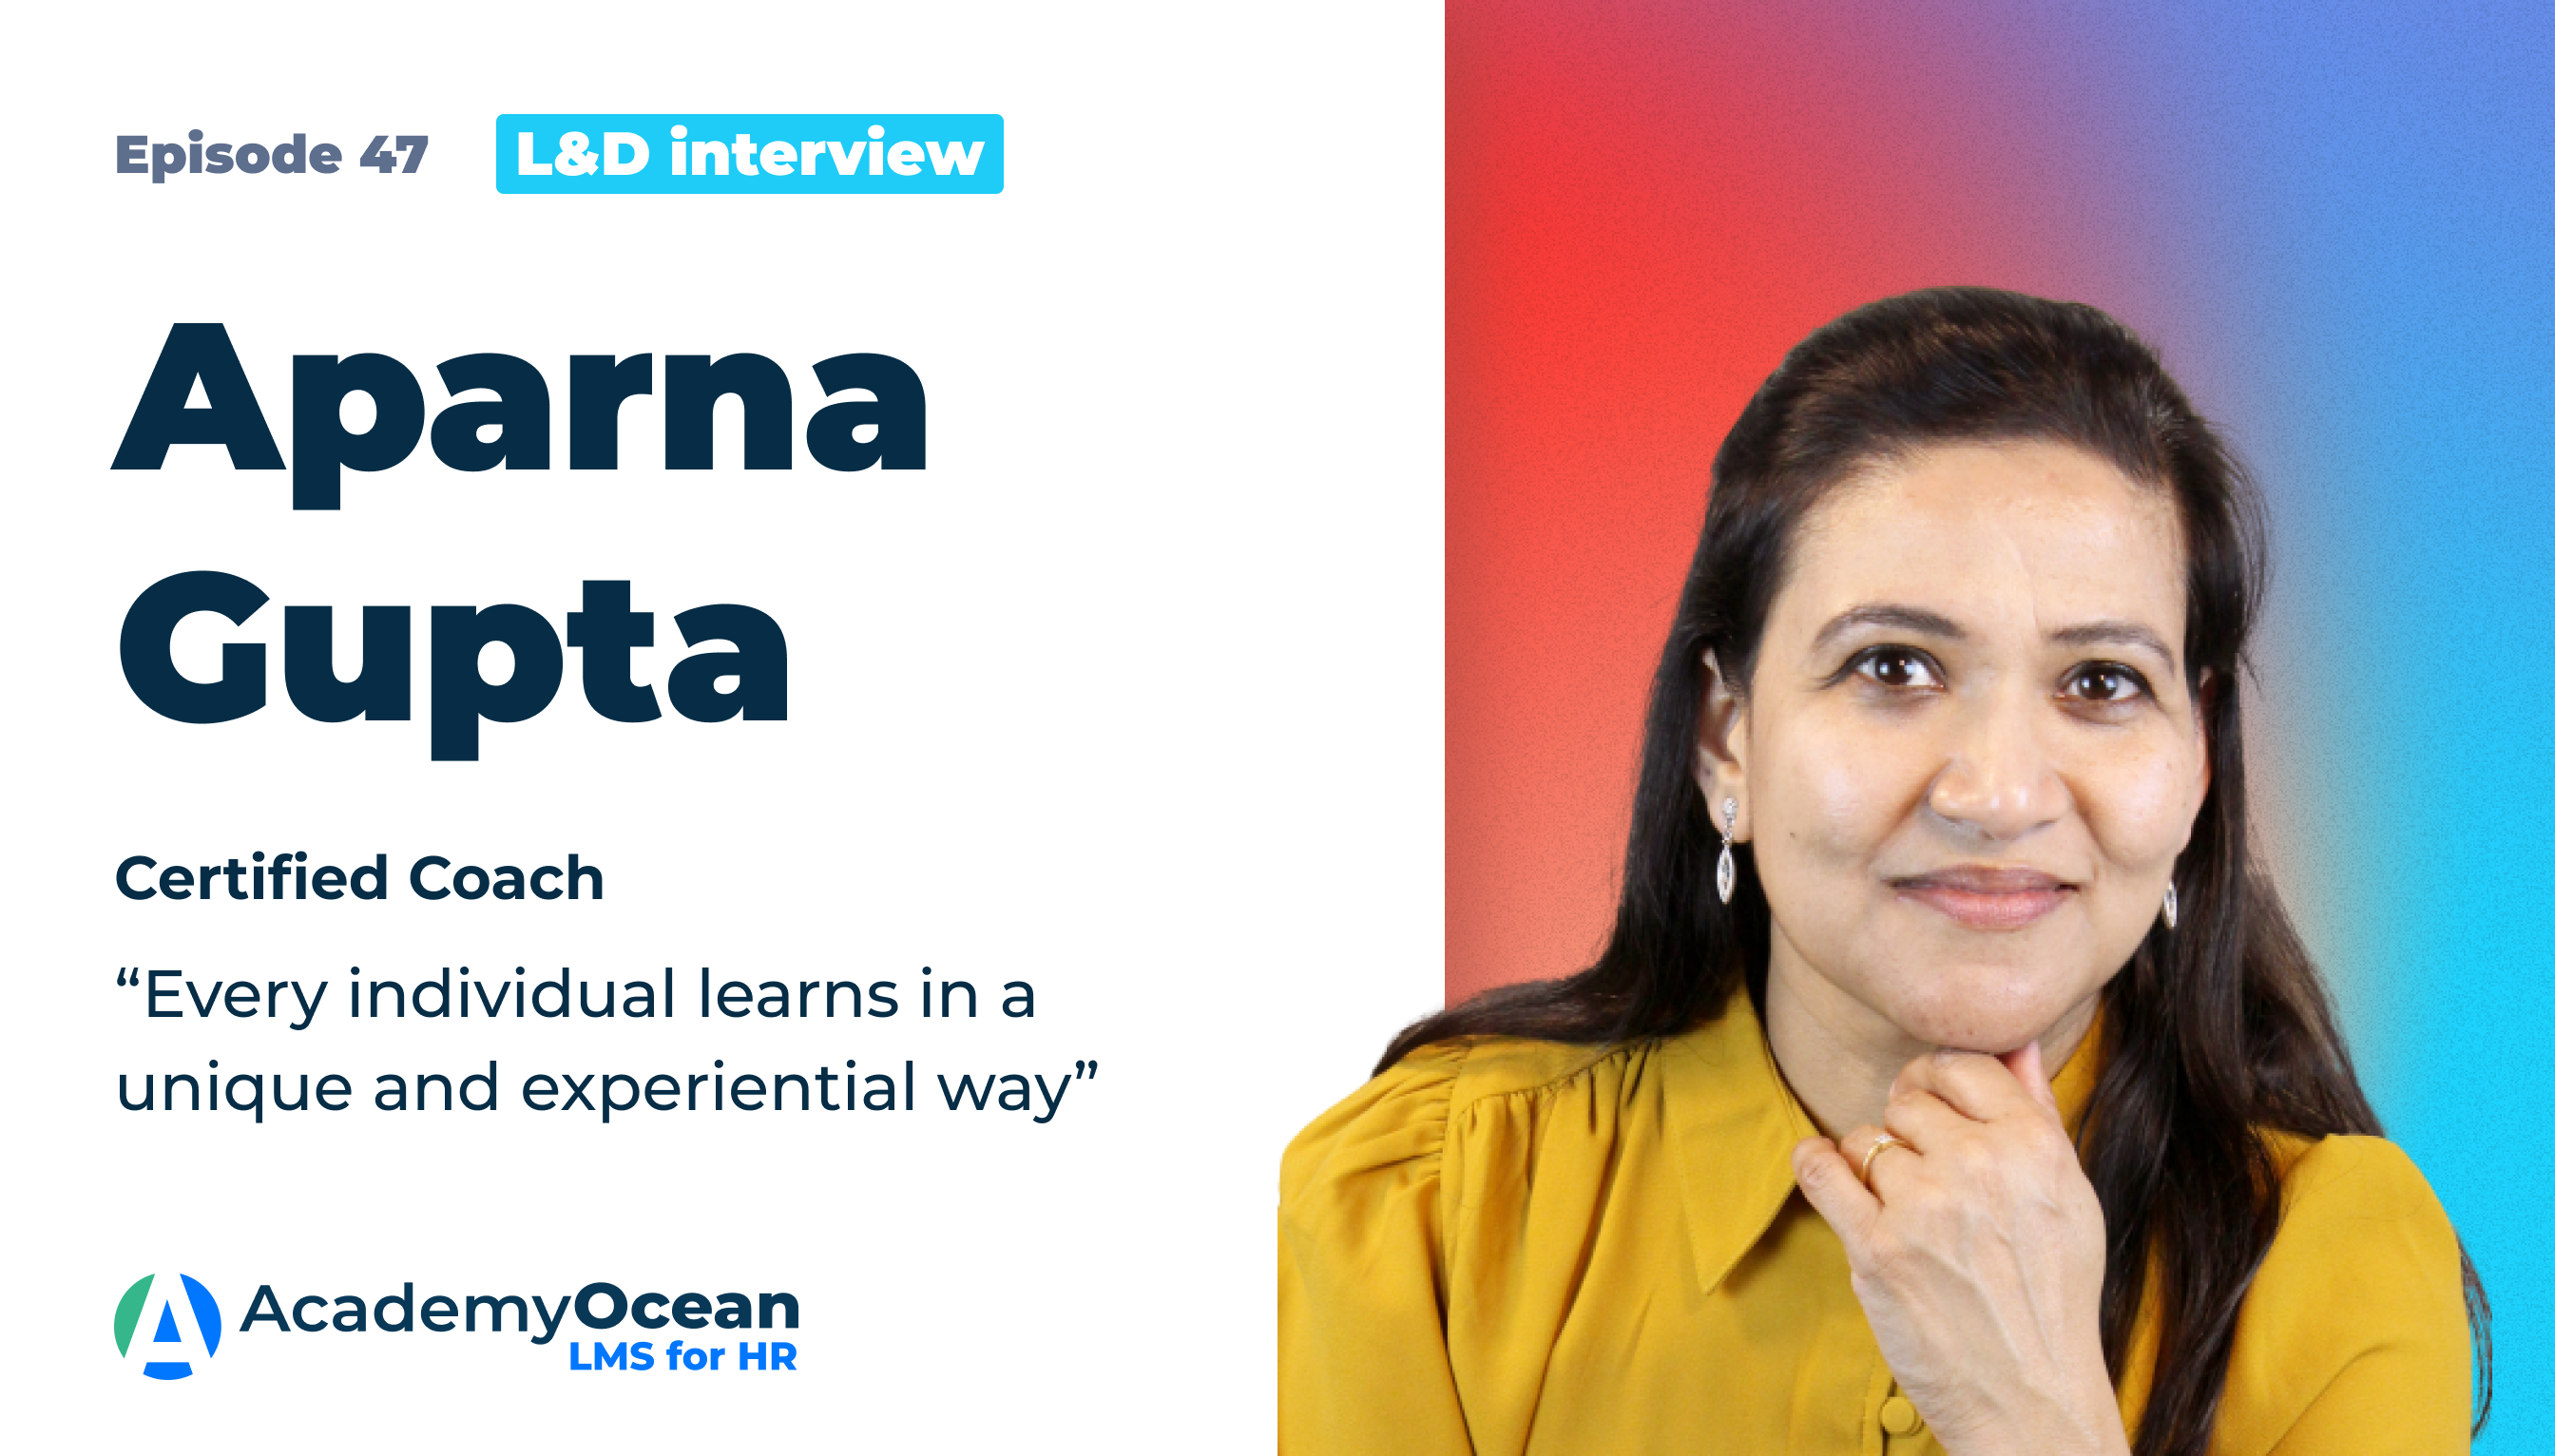 AcademyOcean interview with Aparna Gupta